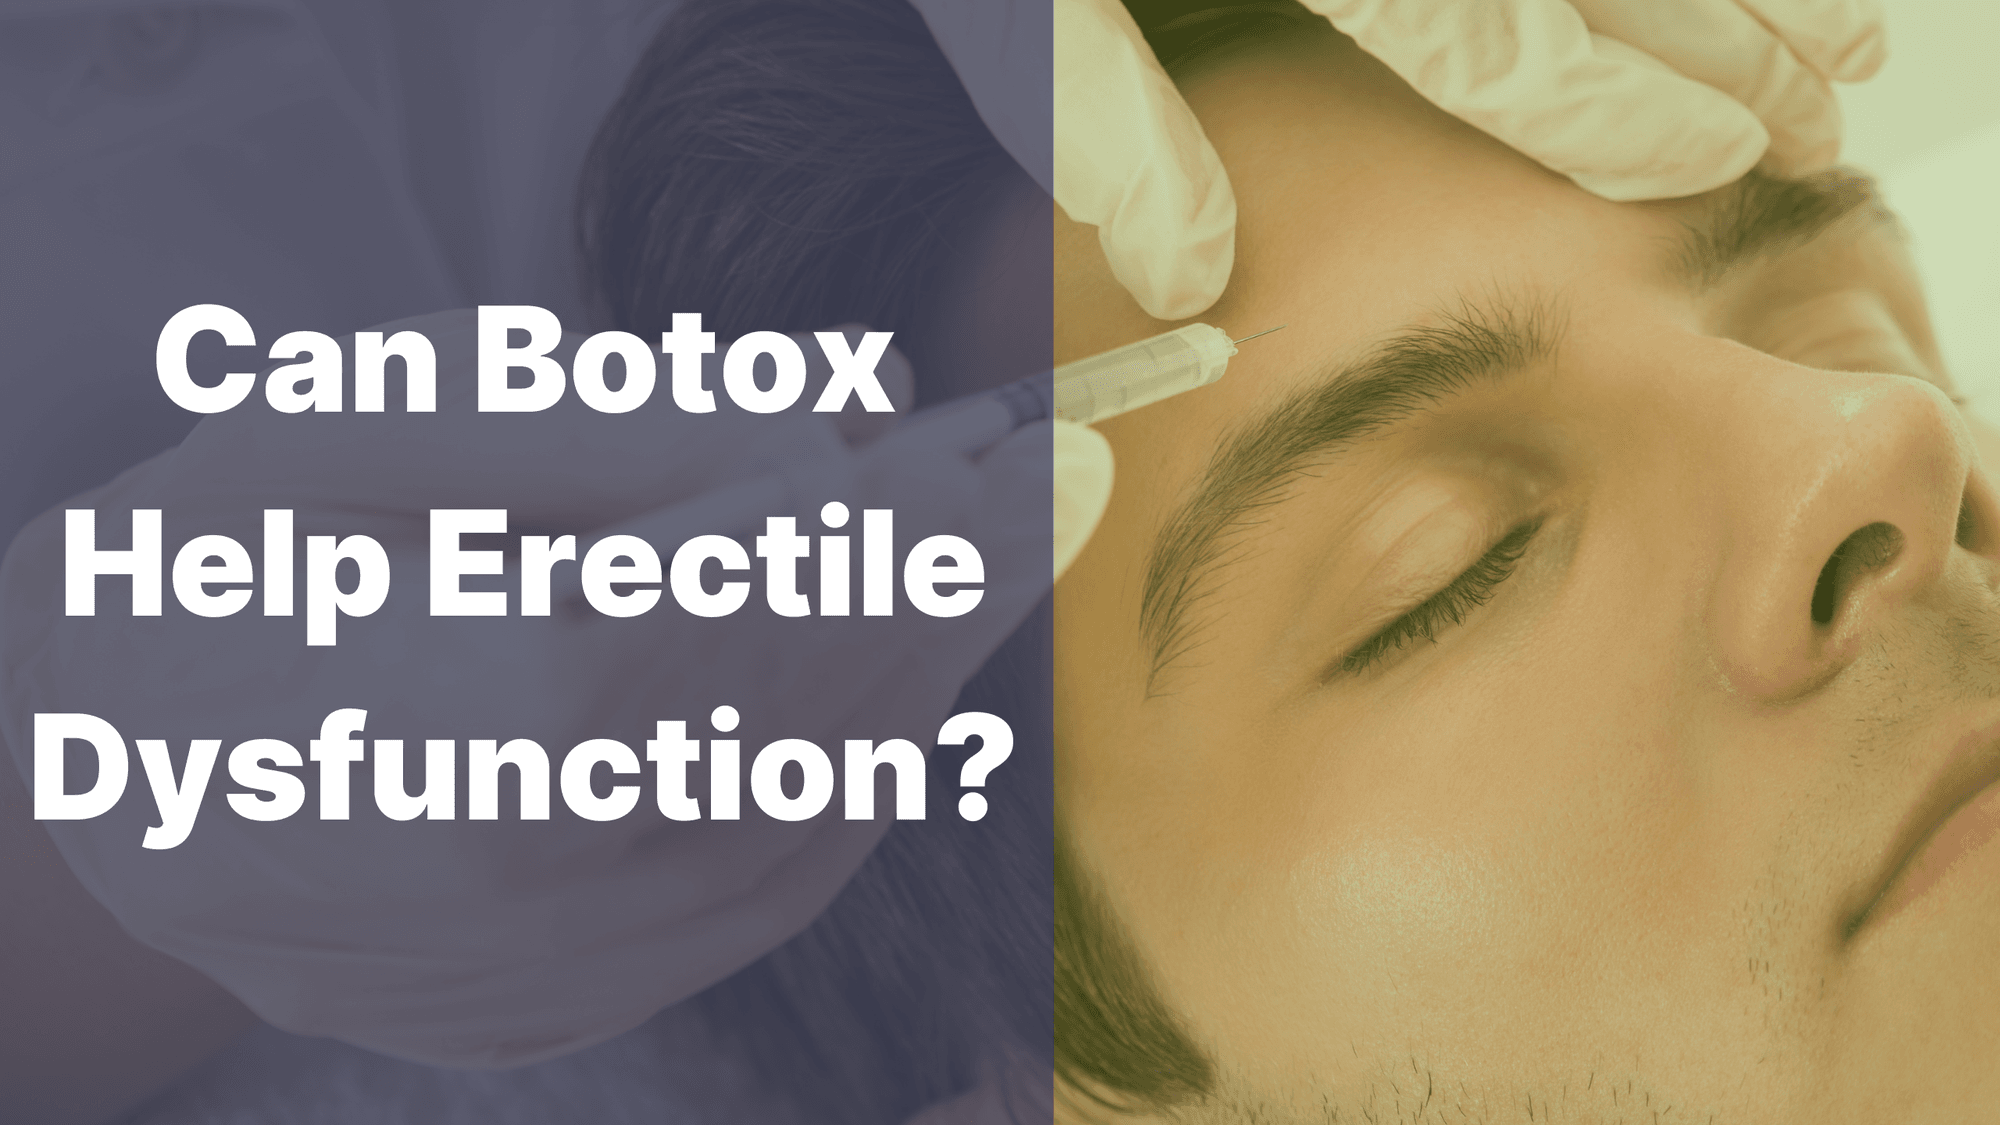 Can Botox Help Erectile Dysfunction cover